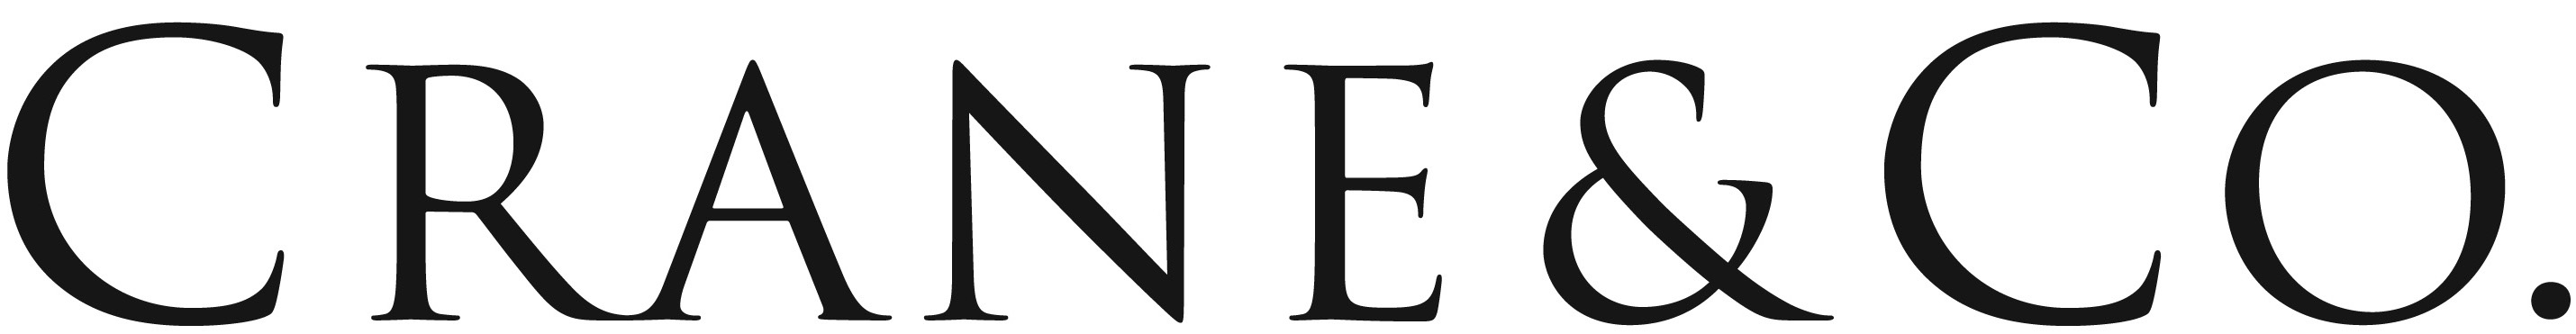 CraneCo Logo - Crane Co Logo.PNG